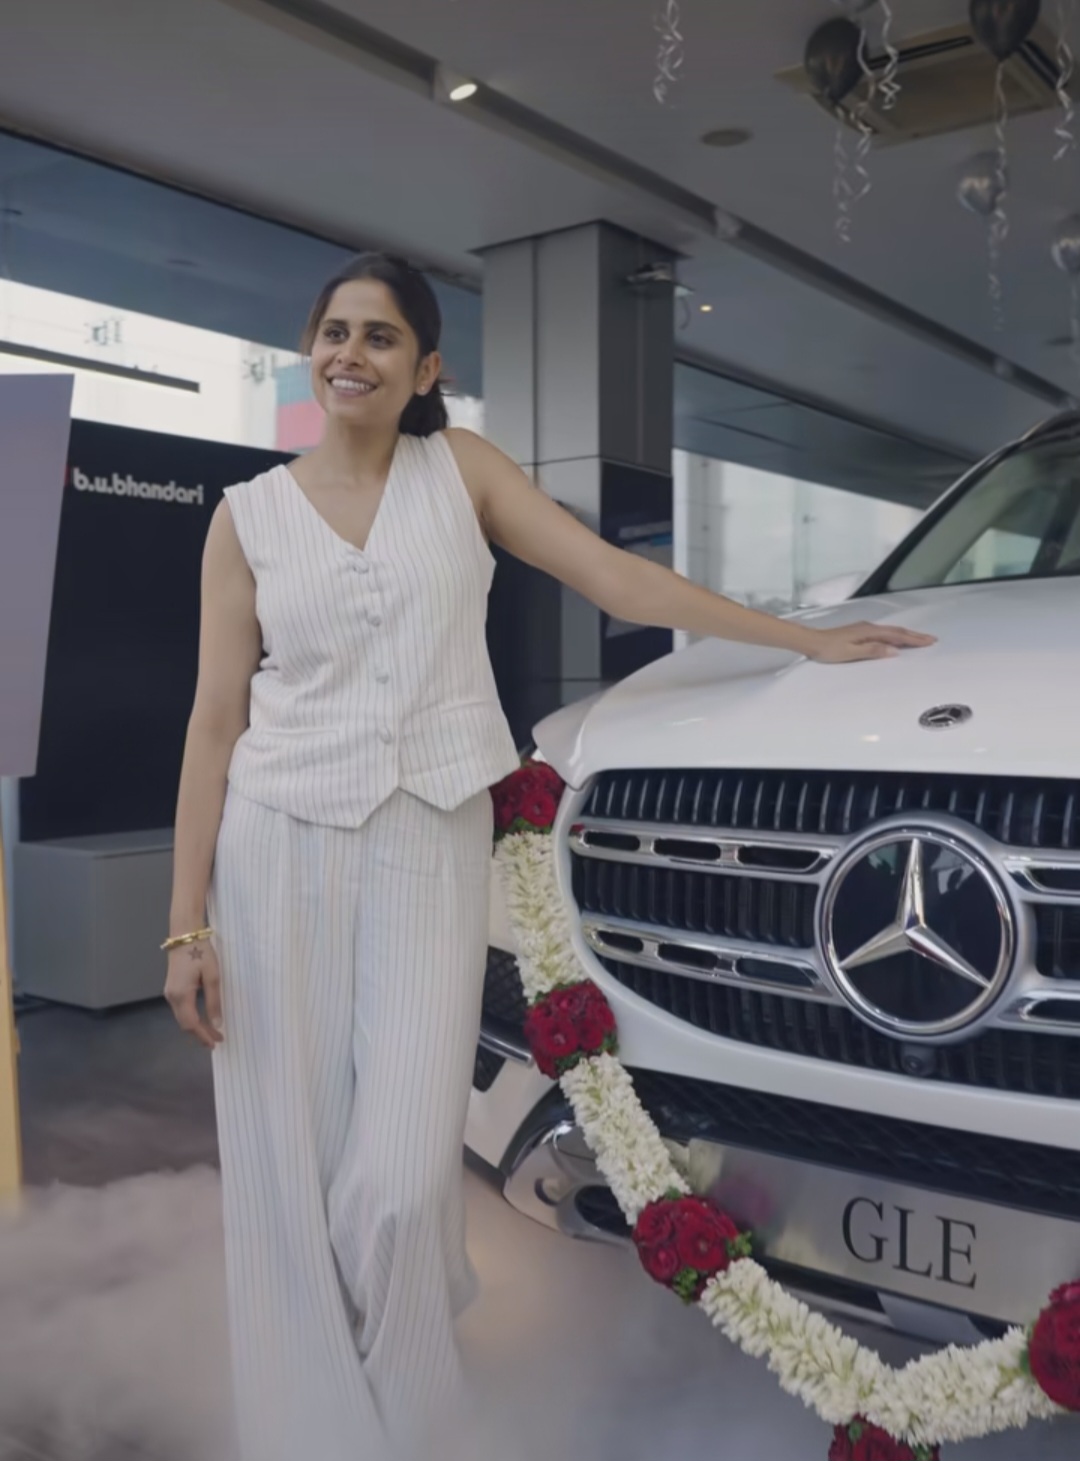 Sai Tamhankar gifted herself a brand new Mercedes Benz GLE